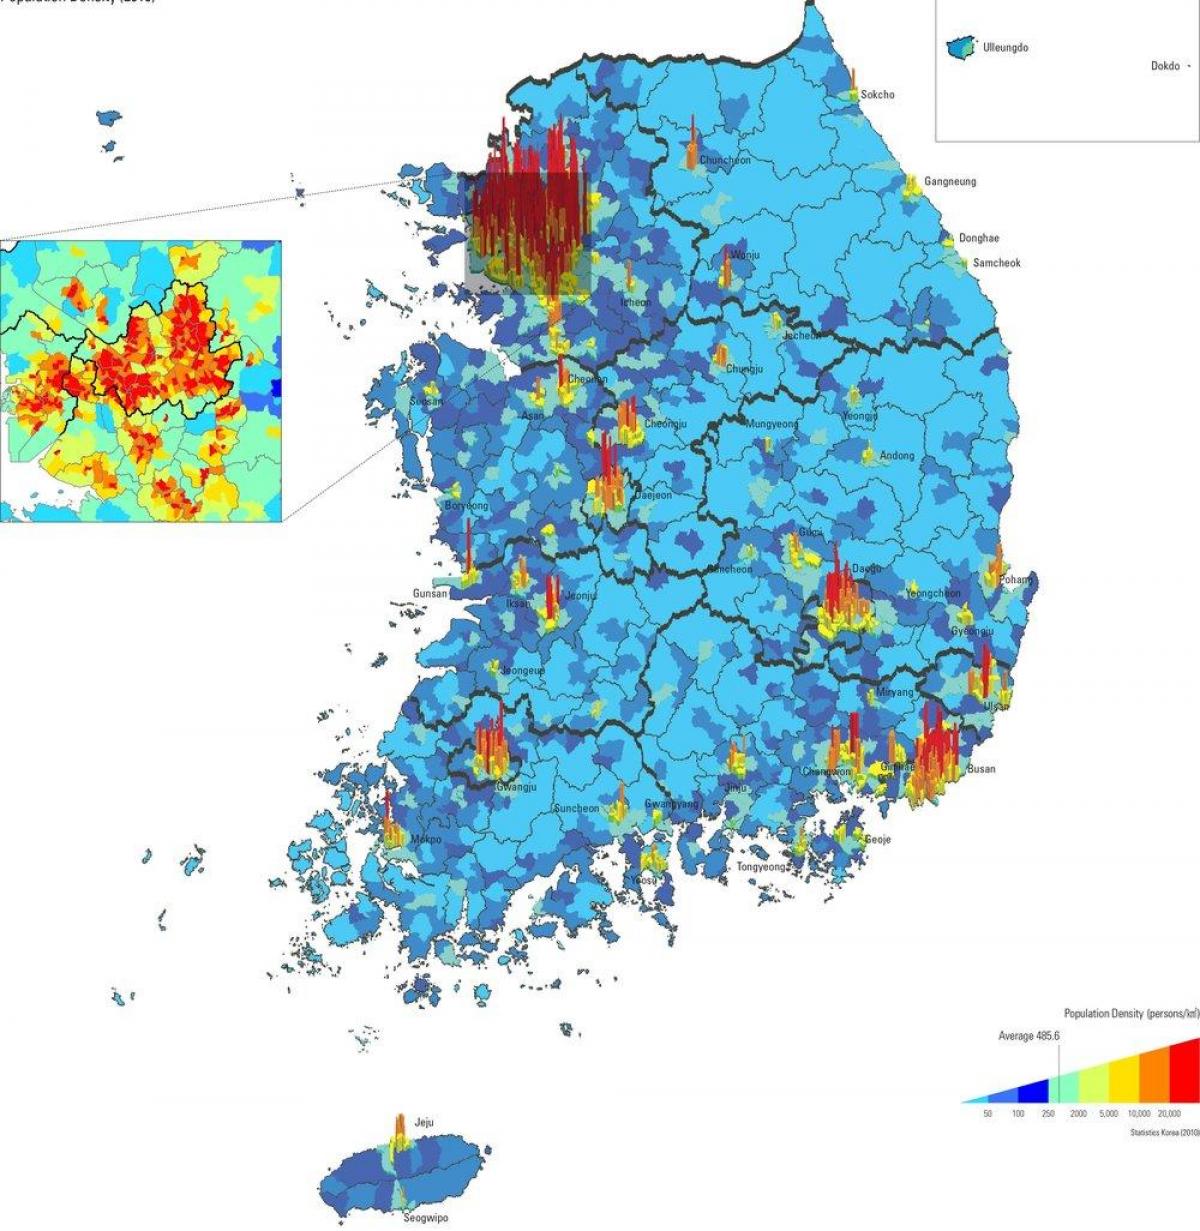 Zuid-Korea (ROK) dichtheidskaart